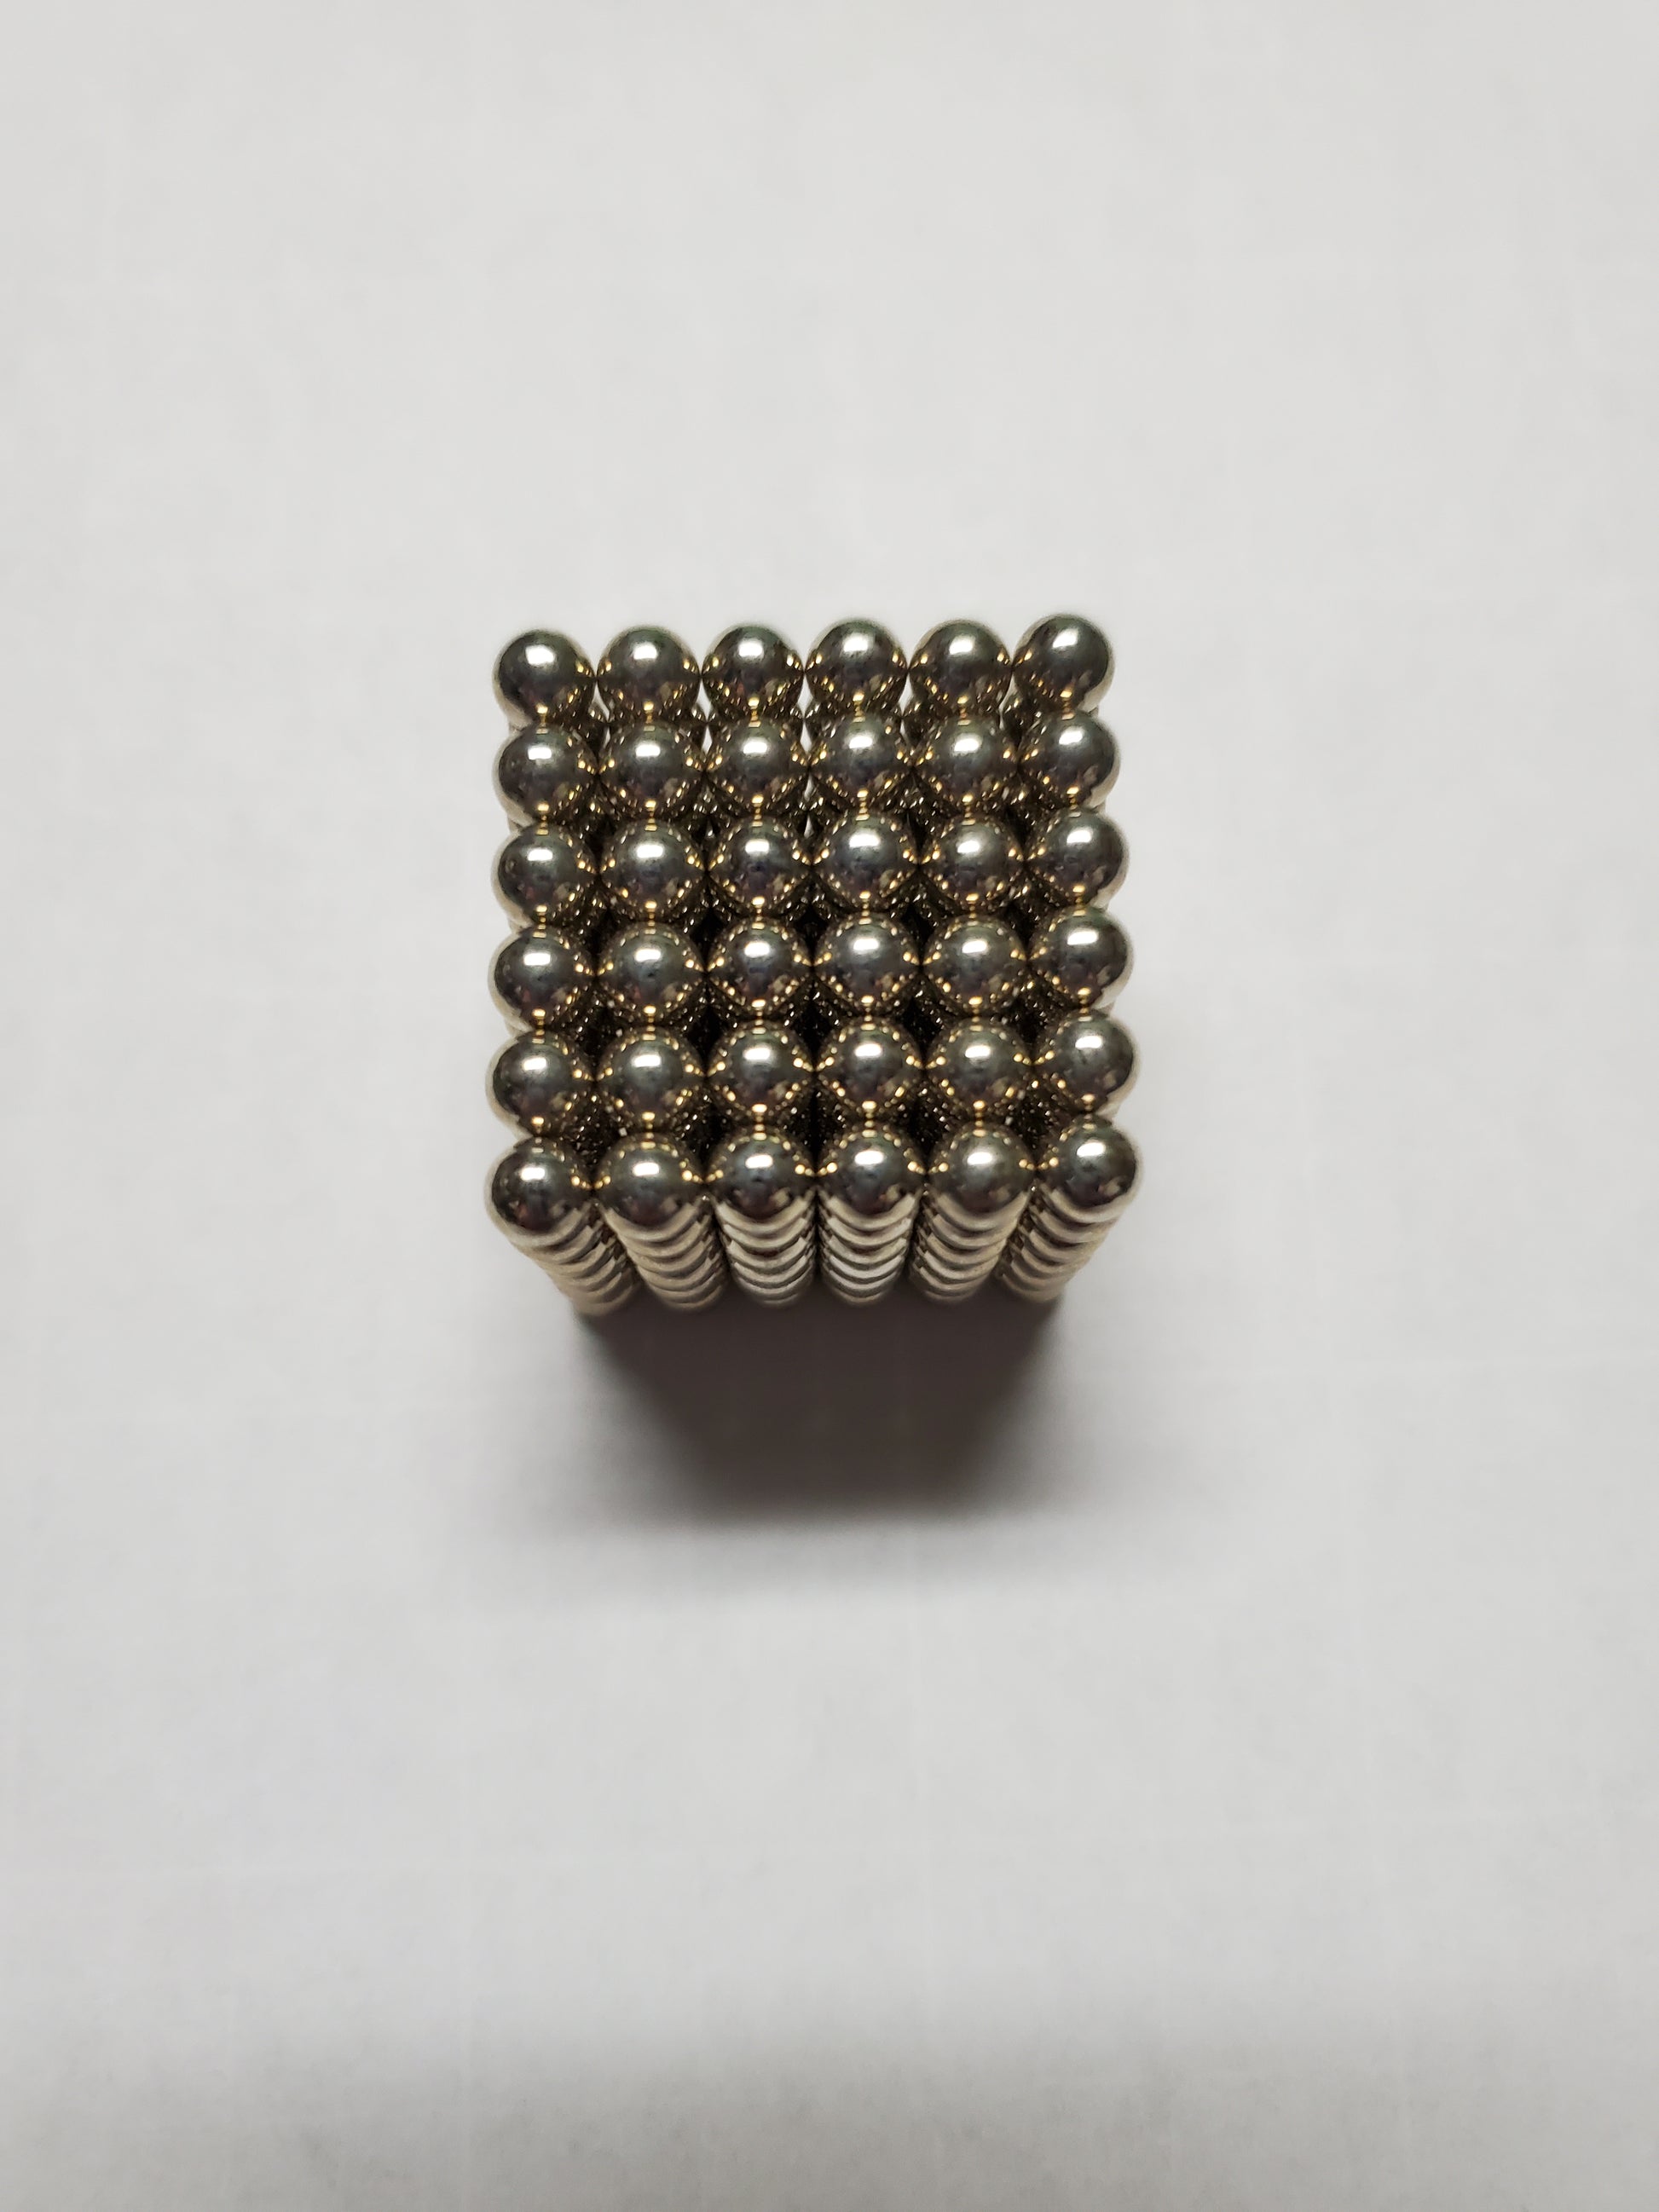 civilisere målbar Royal familie 3mm (1/8") round spheres / balls 25 / 50 / 100 / 250 pcs STRONG MAGNET –  Thackery